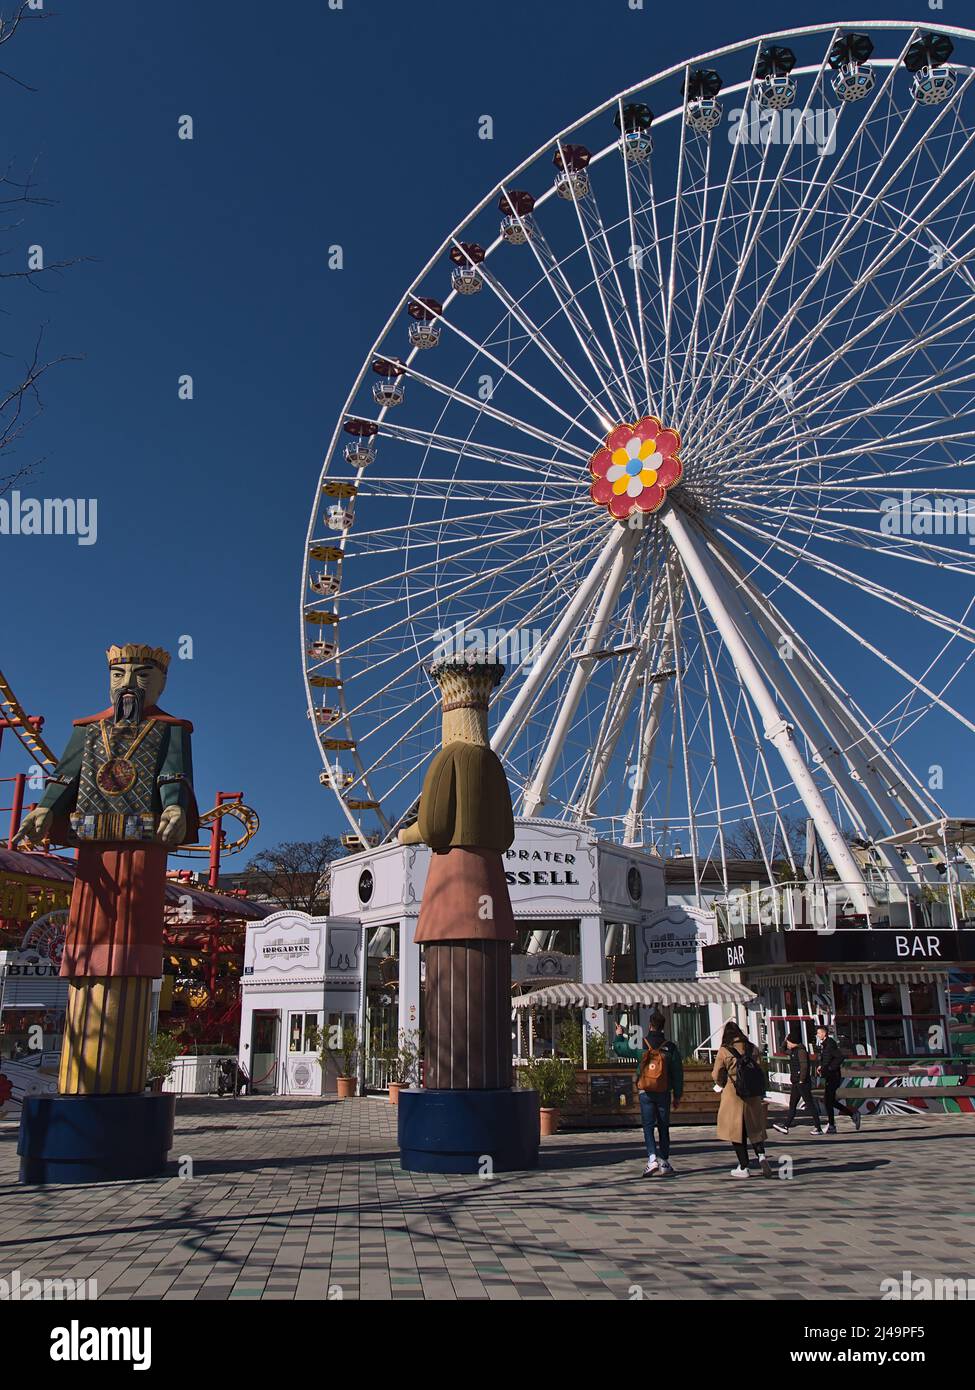 Tourists enjoying their time in popular amusement park Wurstelprater near Wiener Prater in Vienna, Austria with tall ferris wheel Blumenrad. Stock Photo